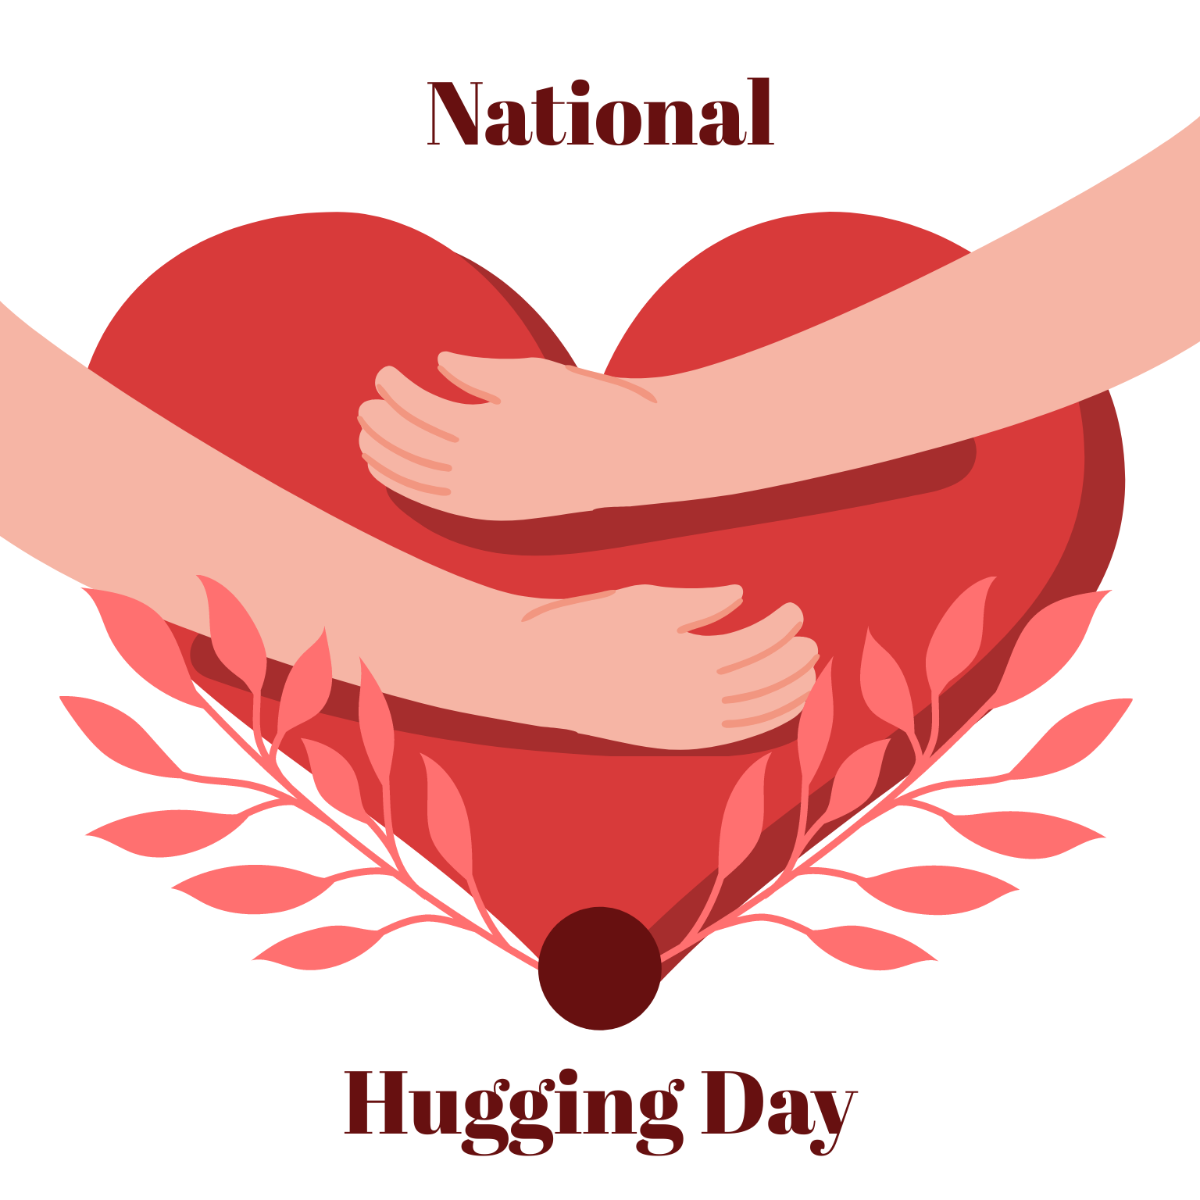 National Hugging Day Illustration Template